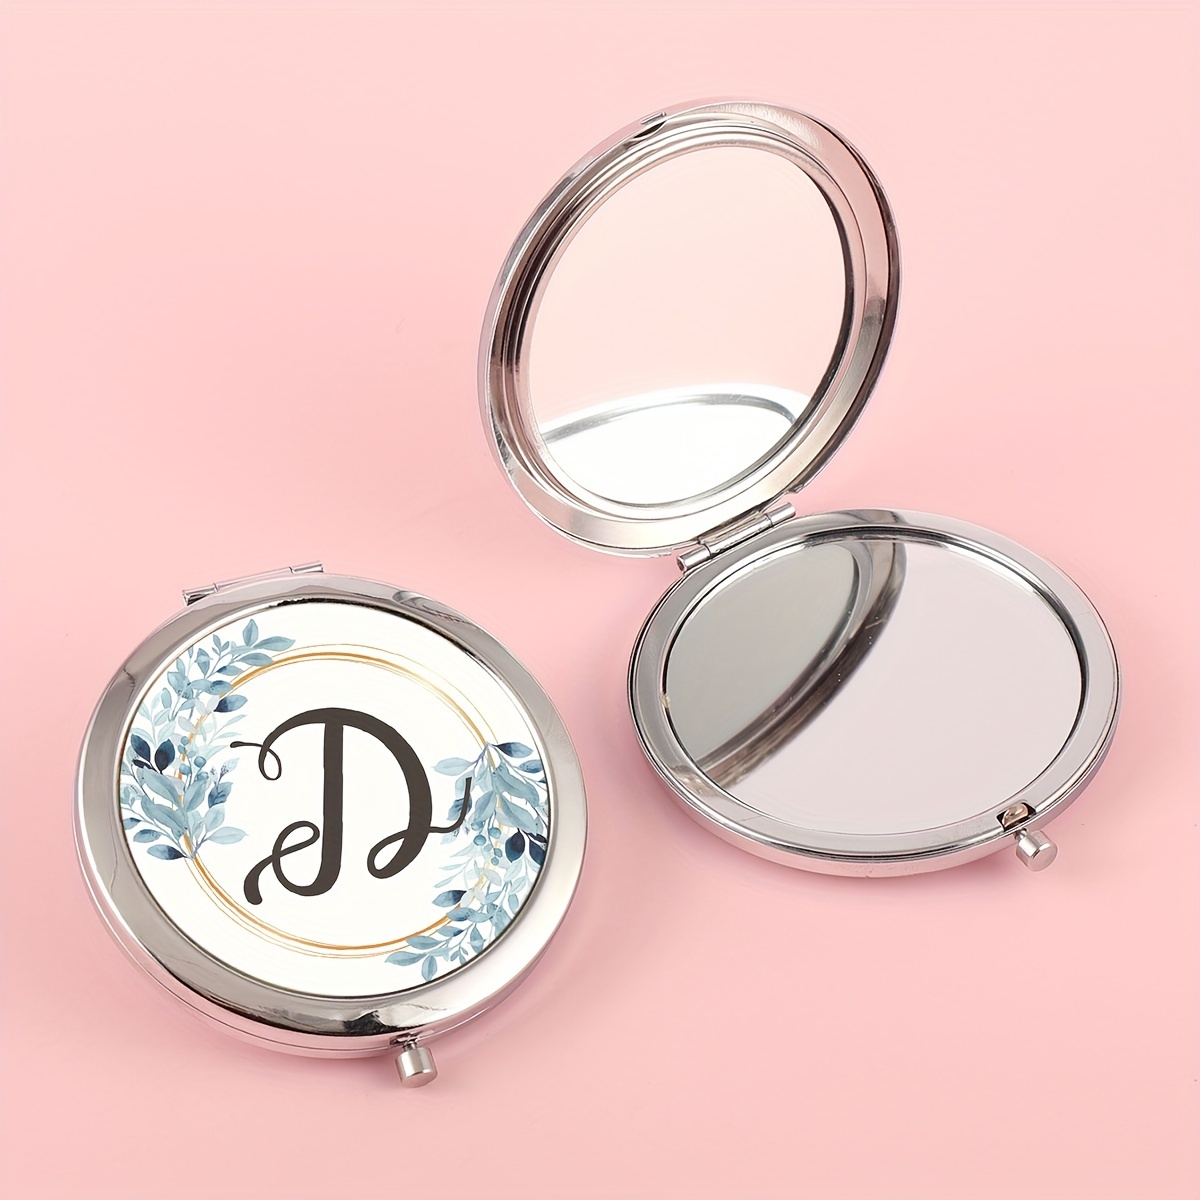 Mini makeup Sister birthday present Bridesmaid compact mirror for